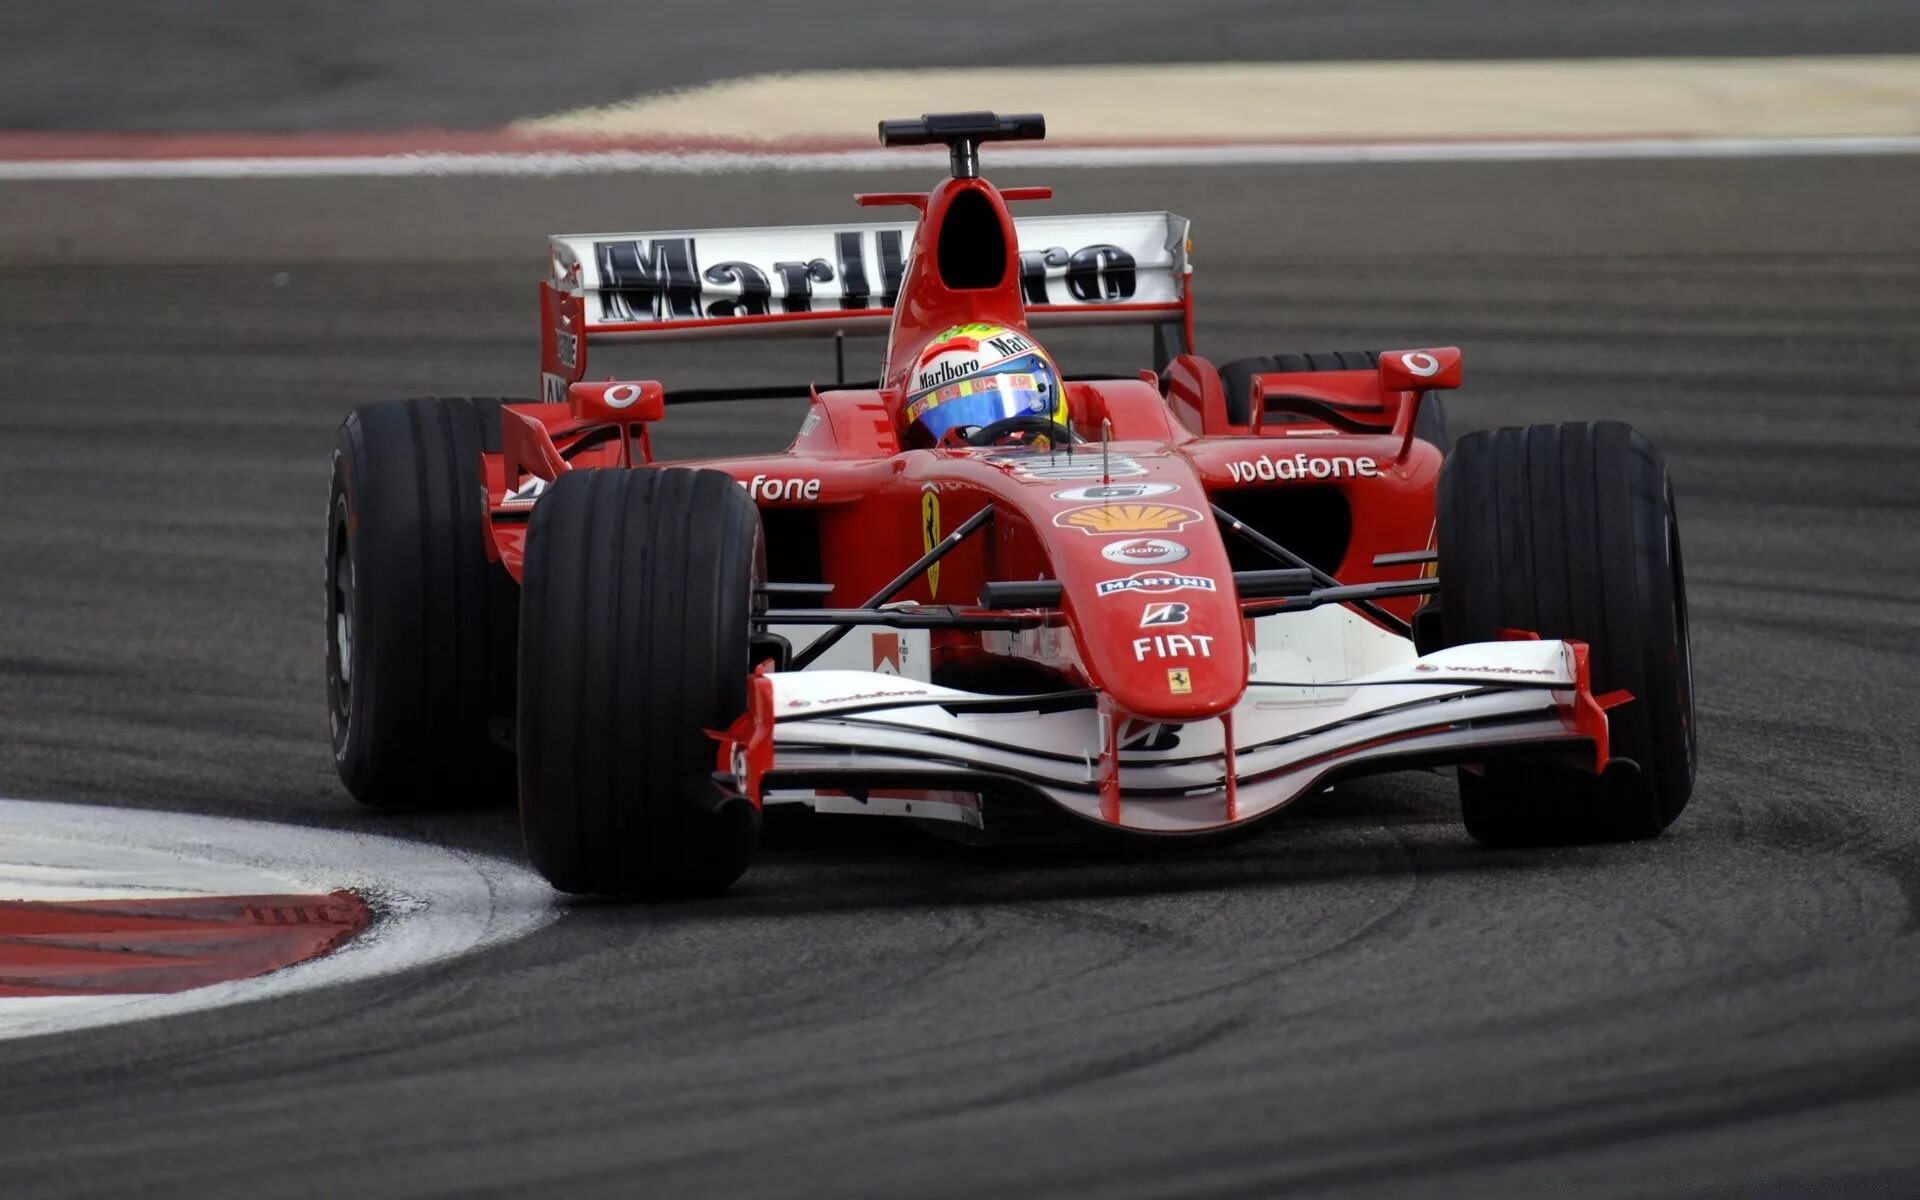 Ferrari Formula 1. Ferrari f1 f310. Феррари гоночная машина формула 1. Гоночный Болид Феррари формула 1. Формула 1а